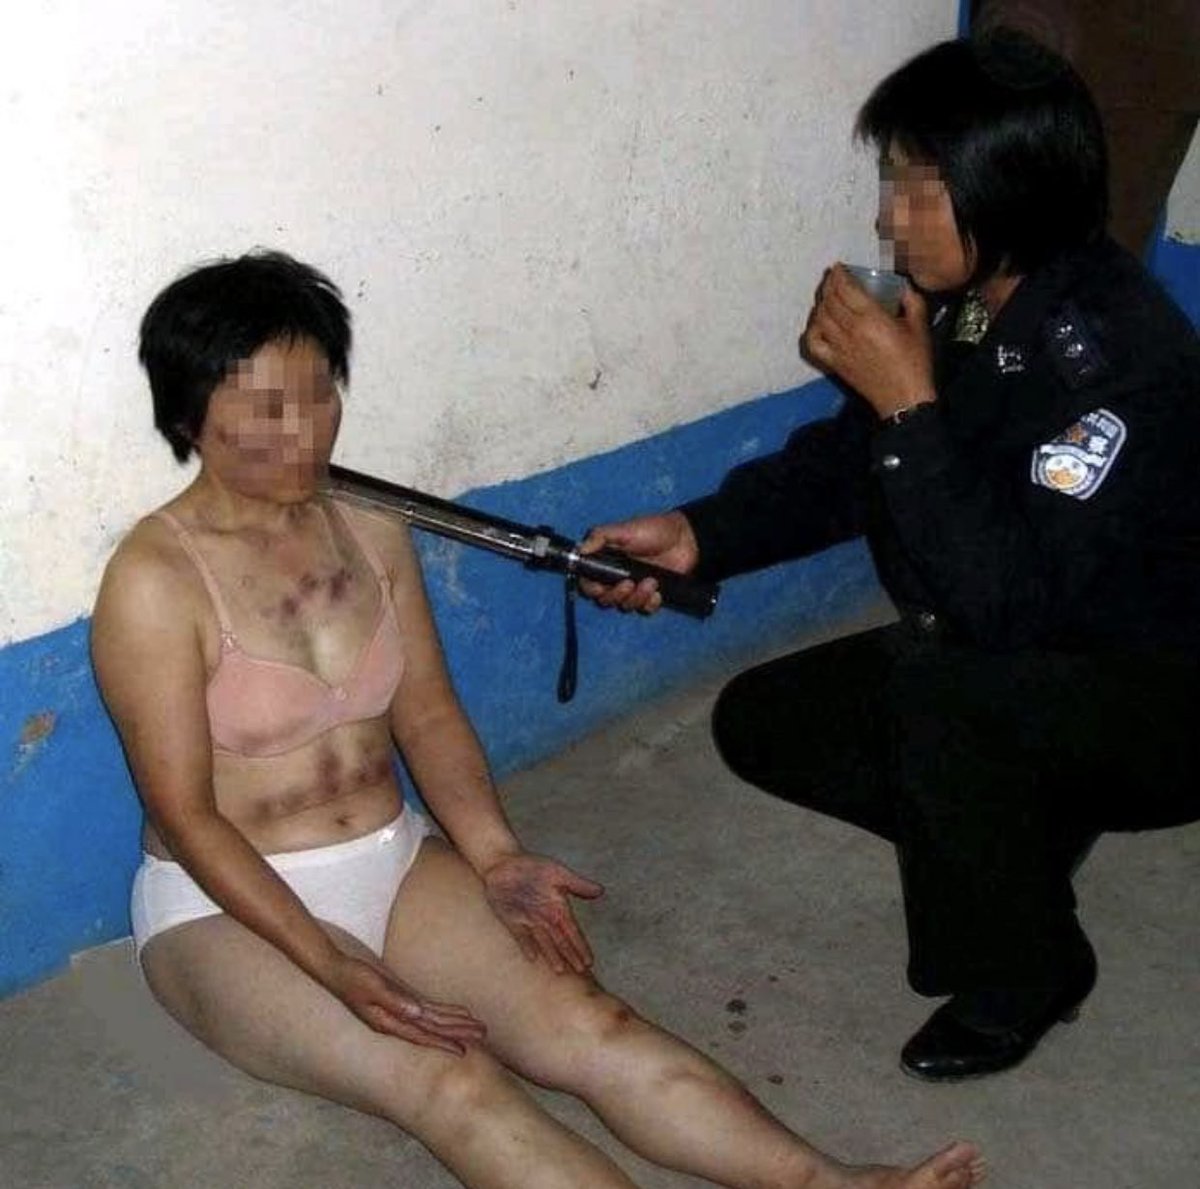 Brazilian woman executed by handgun 